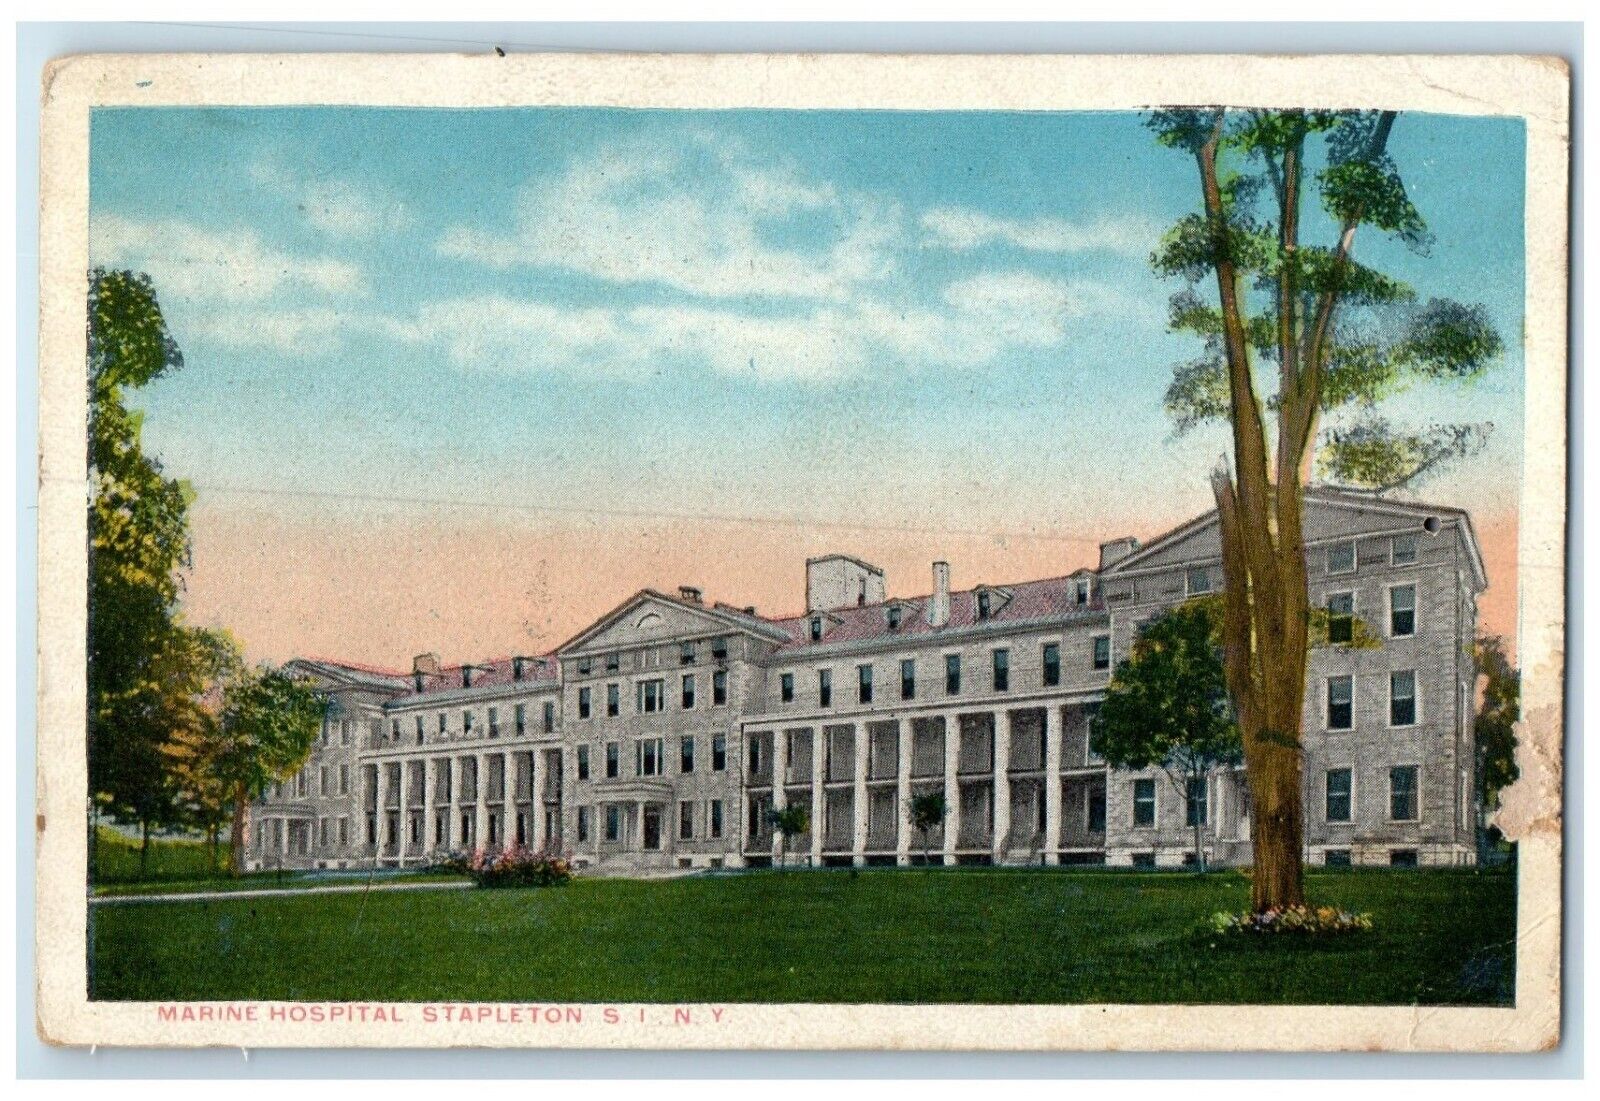 1919 Exterior View Marine Hospital Building Stapleton New York Vintage Postcard